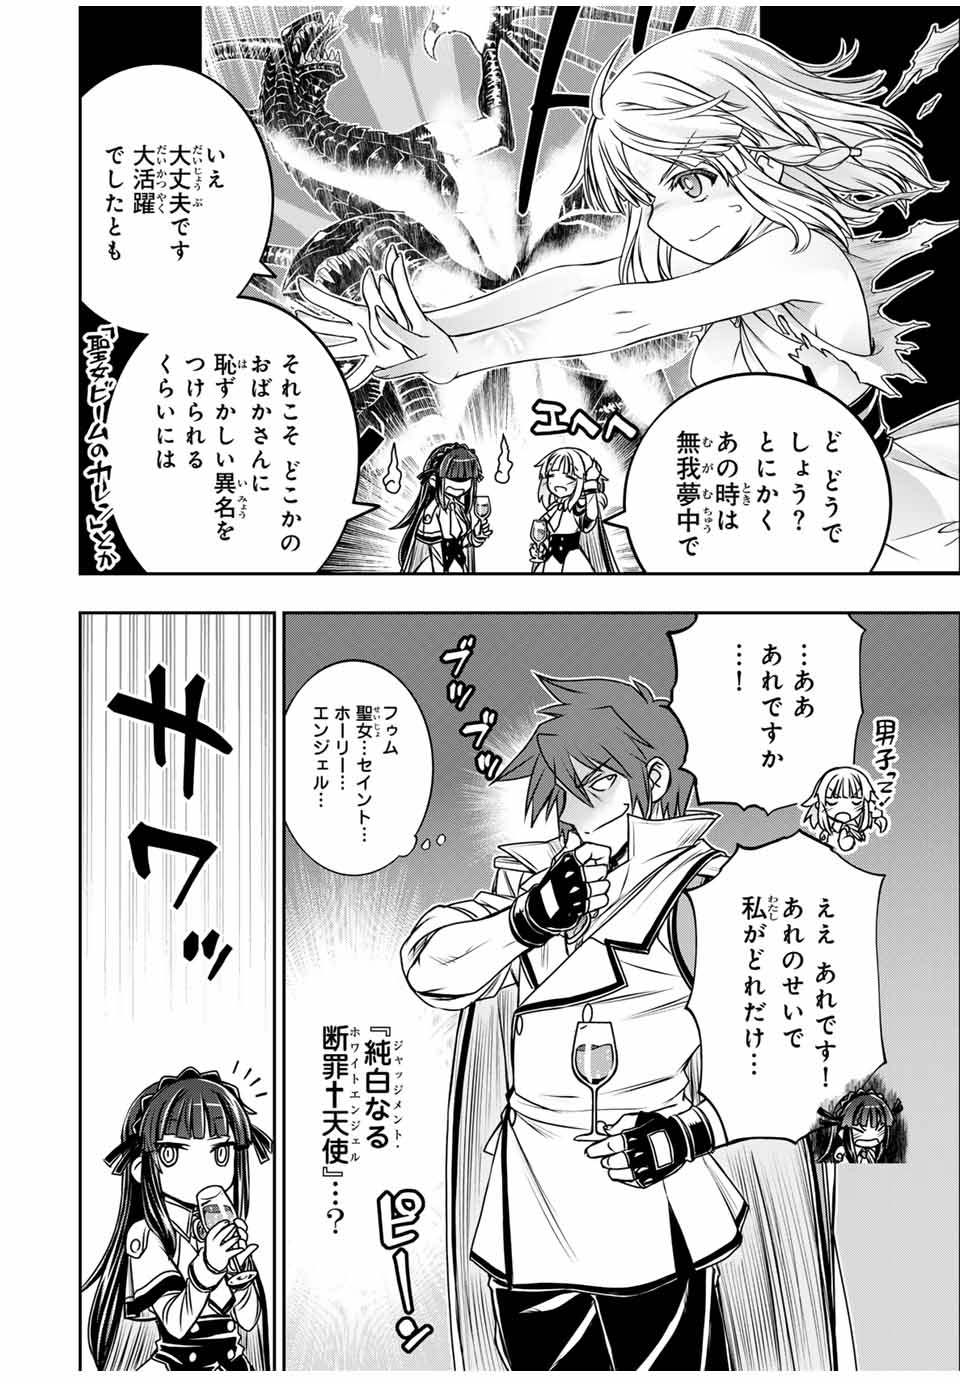 Nengan no Akuyaku Reijou (Last Boss) no Karada wo Teniiretazo!  - Chapter 24 - Page 6